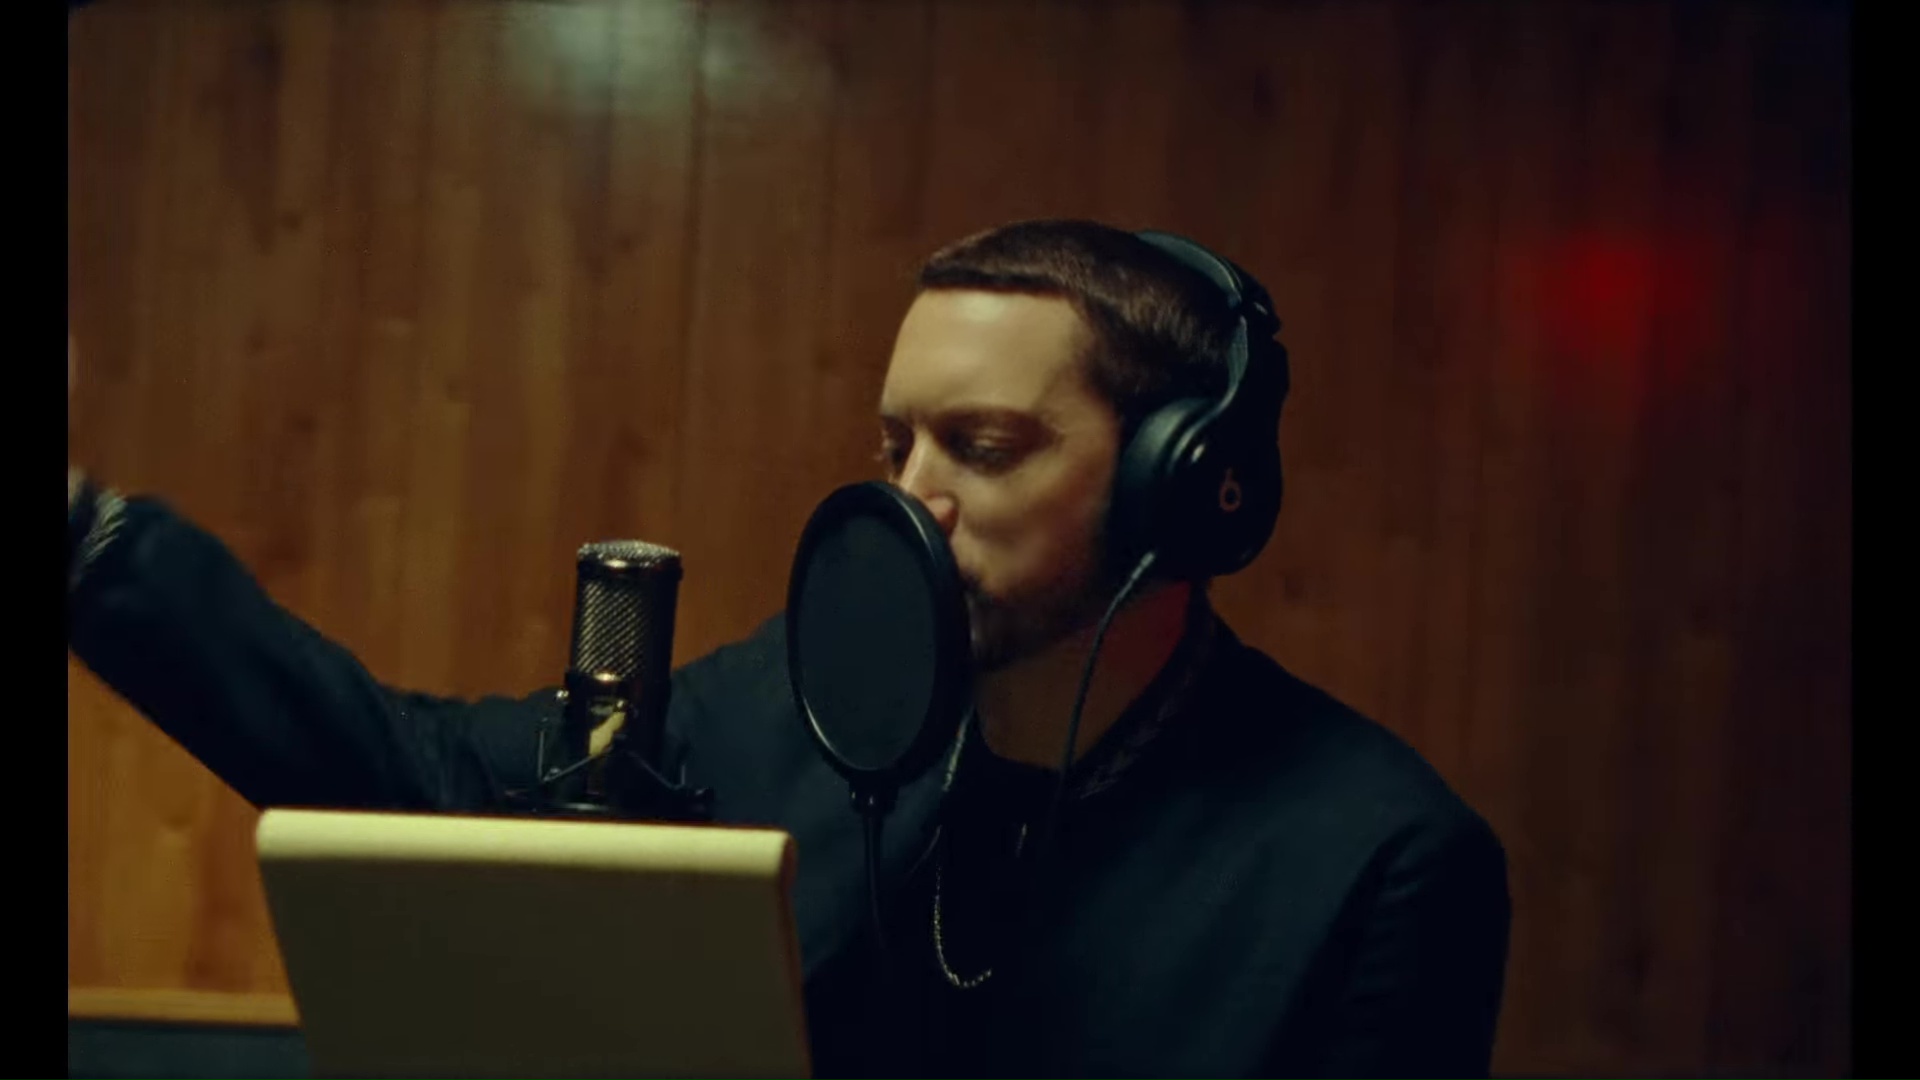 Beats Headphones in River by Eminem ft. Ed Sheeran (2018)